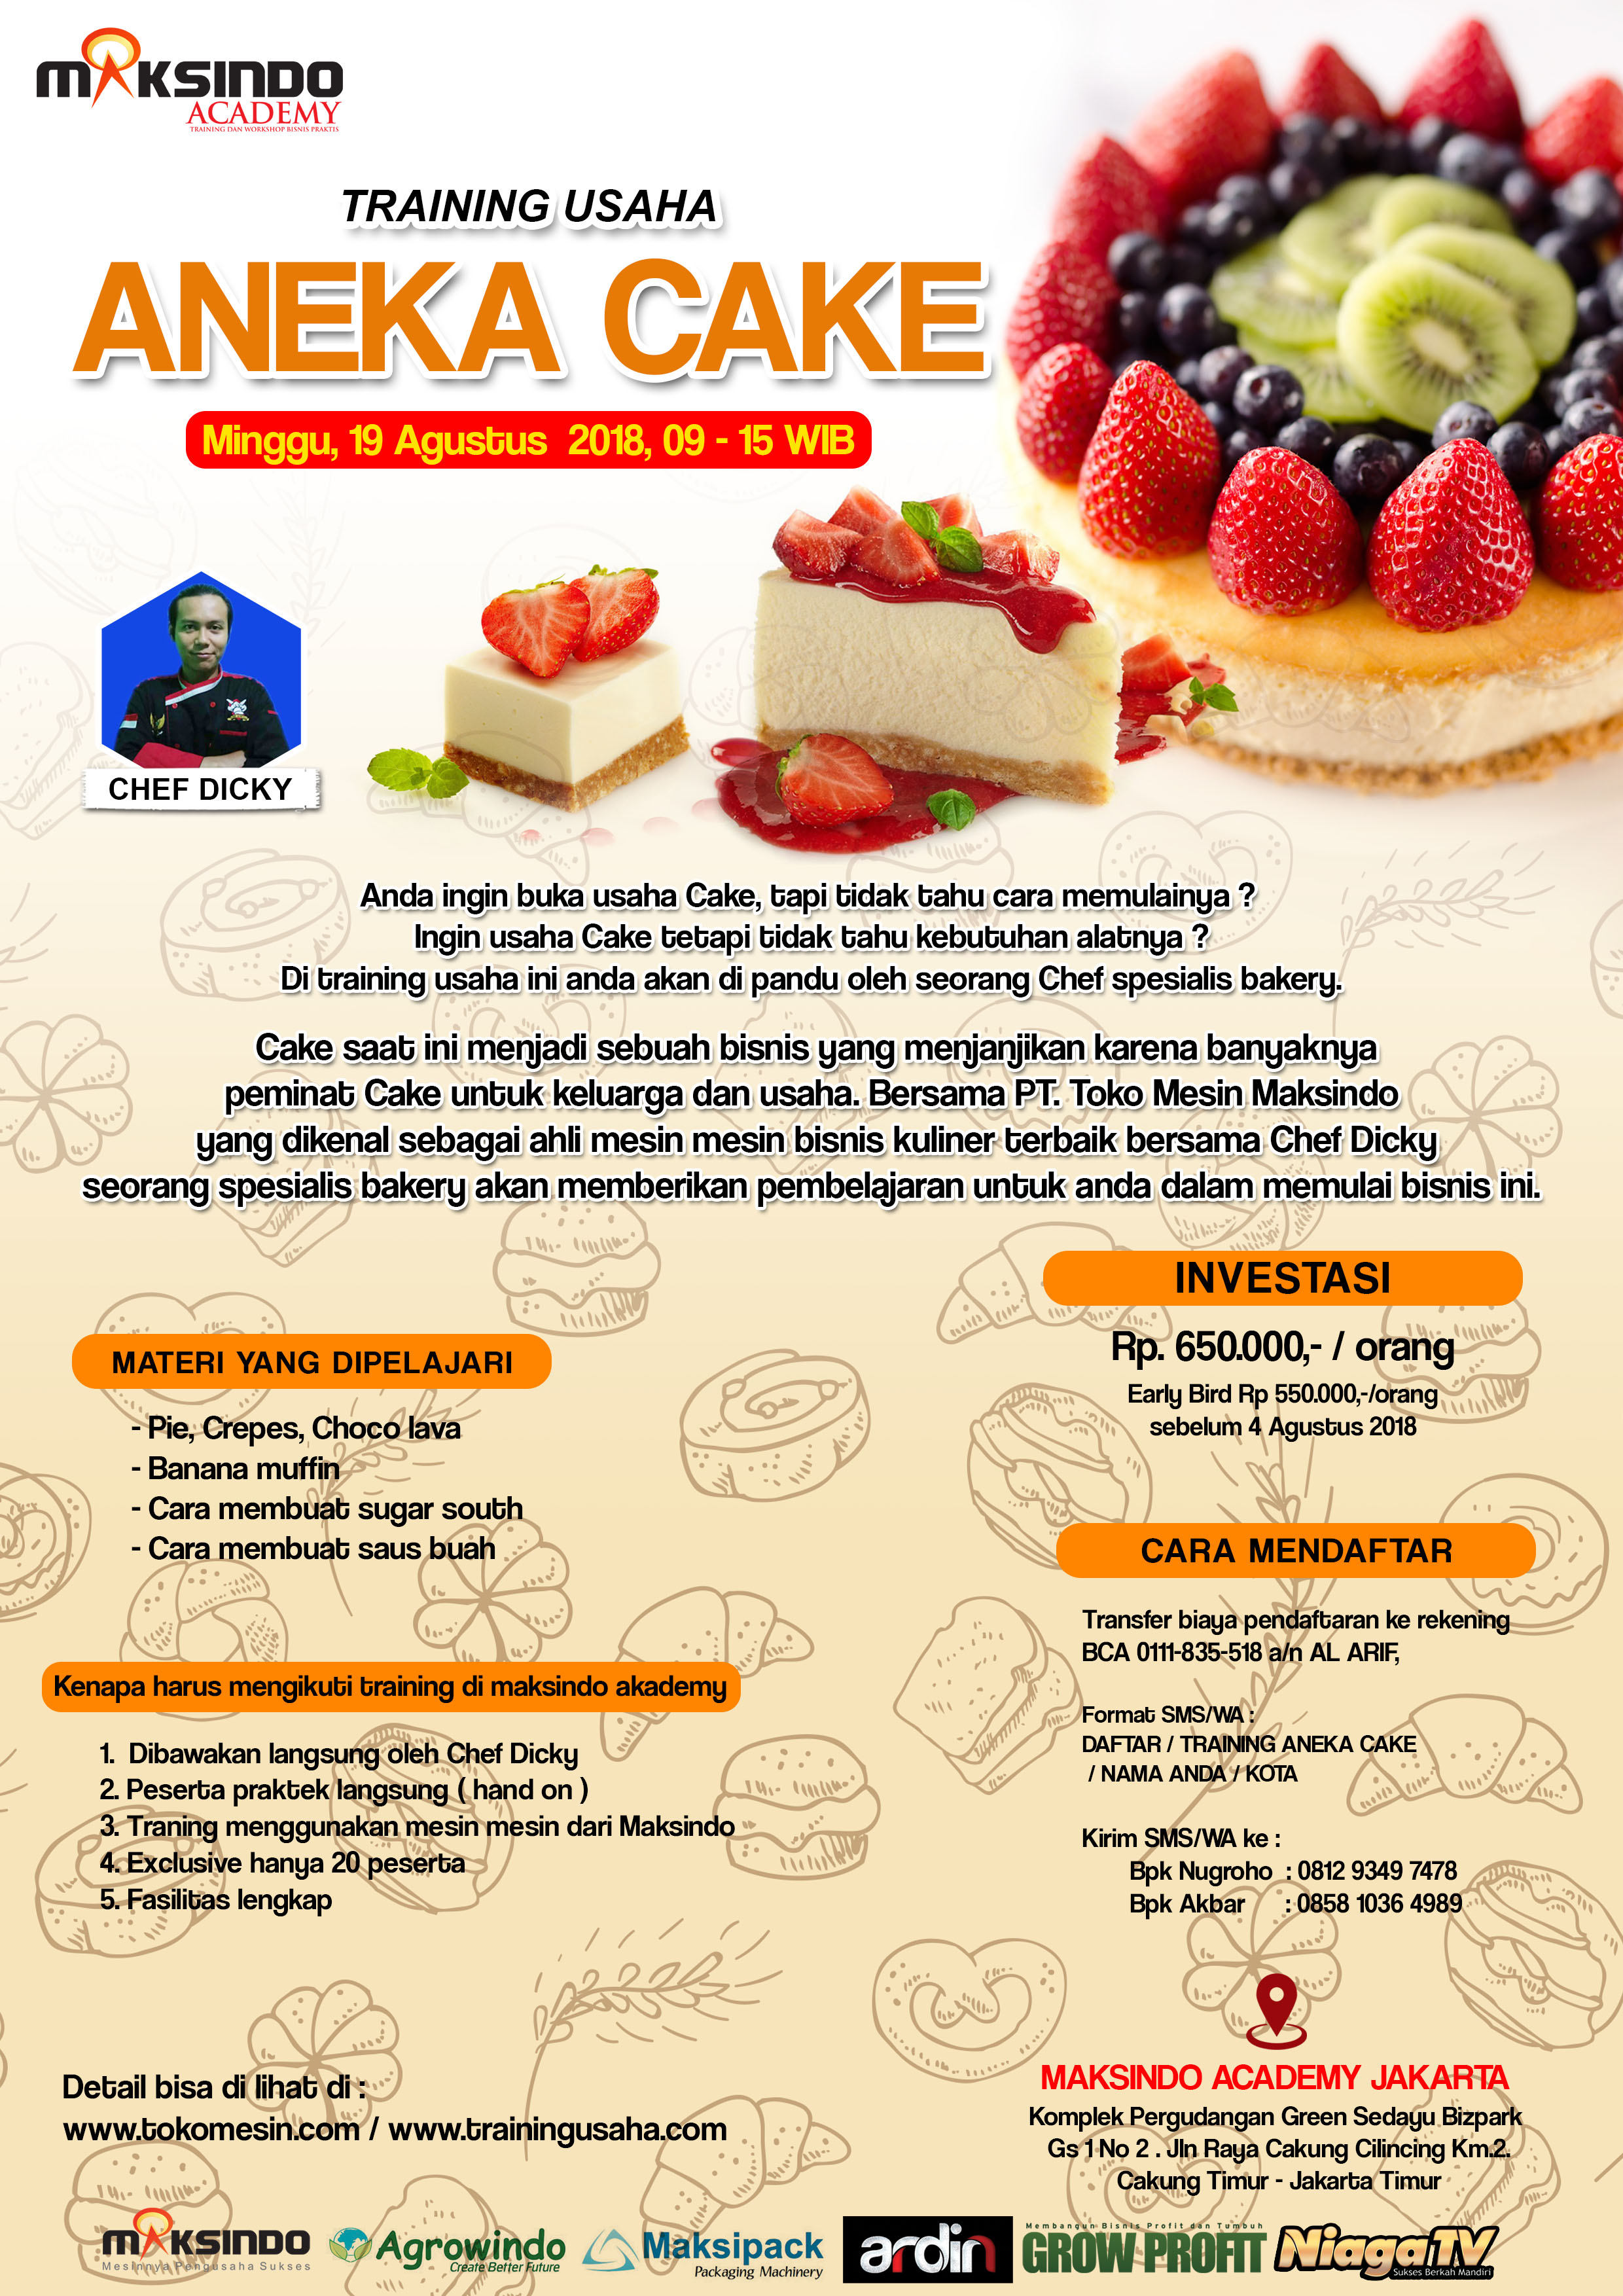 Training Usaha Aneka Cake, 19 Agustus 2018